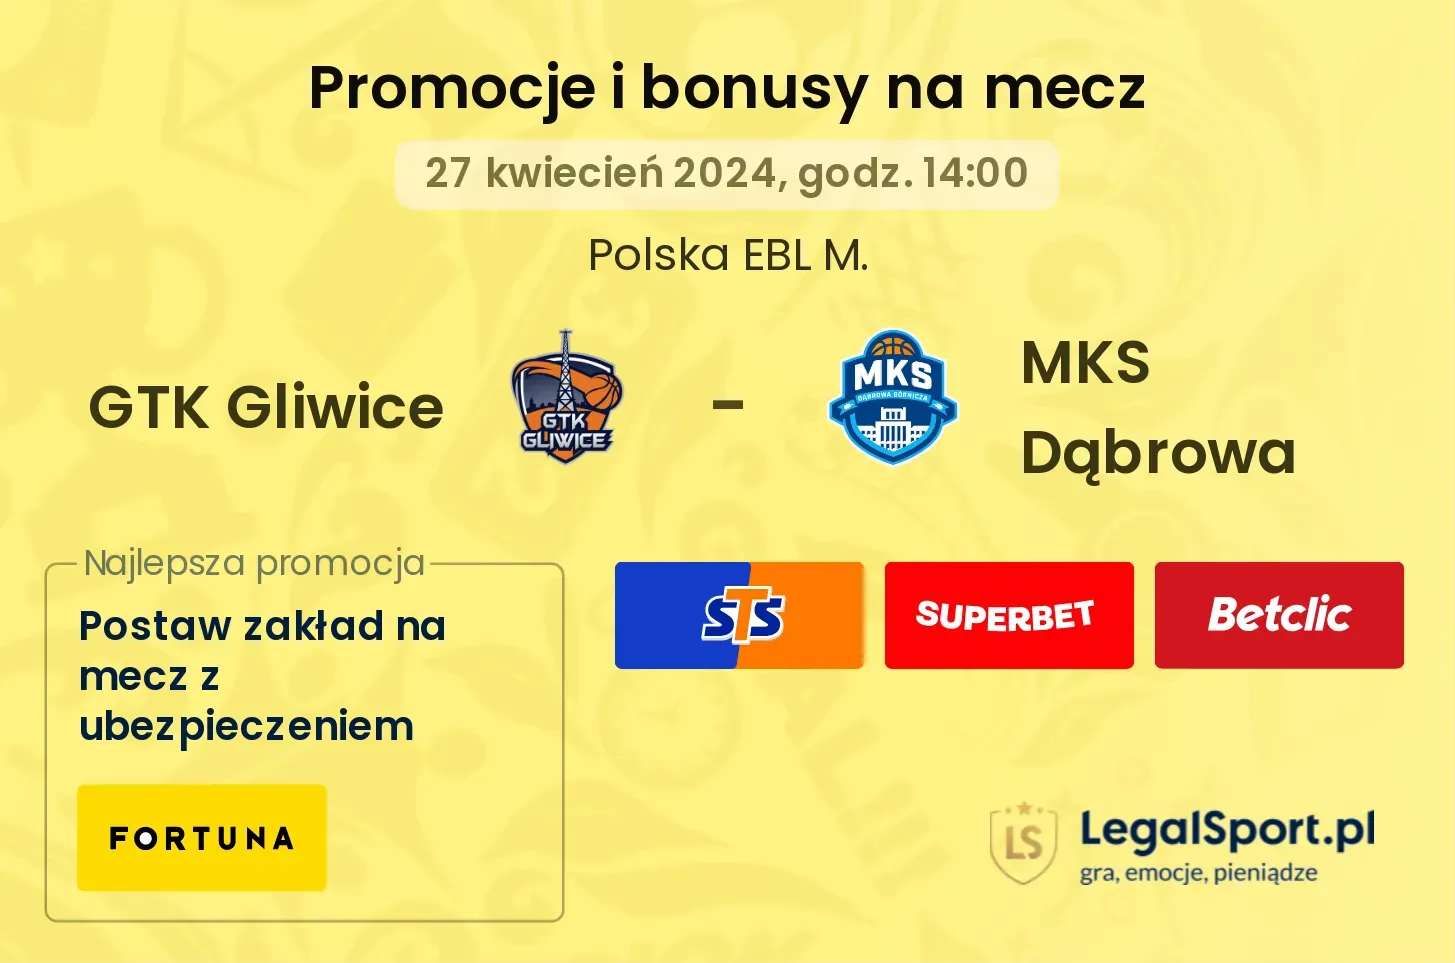 GTK Gliwice - MKS Dąbrowa promocje bonusy na mecz